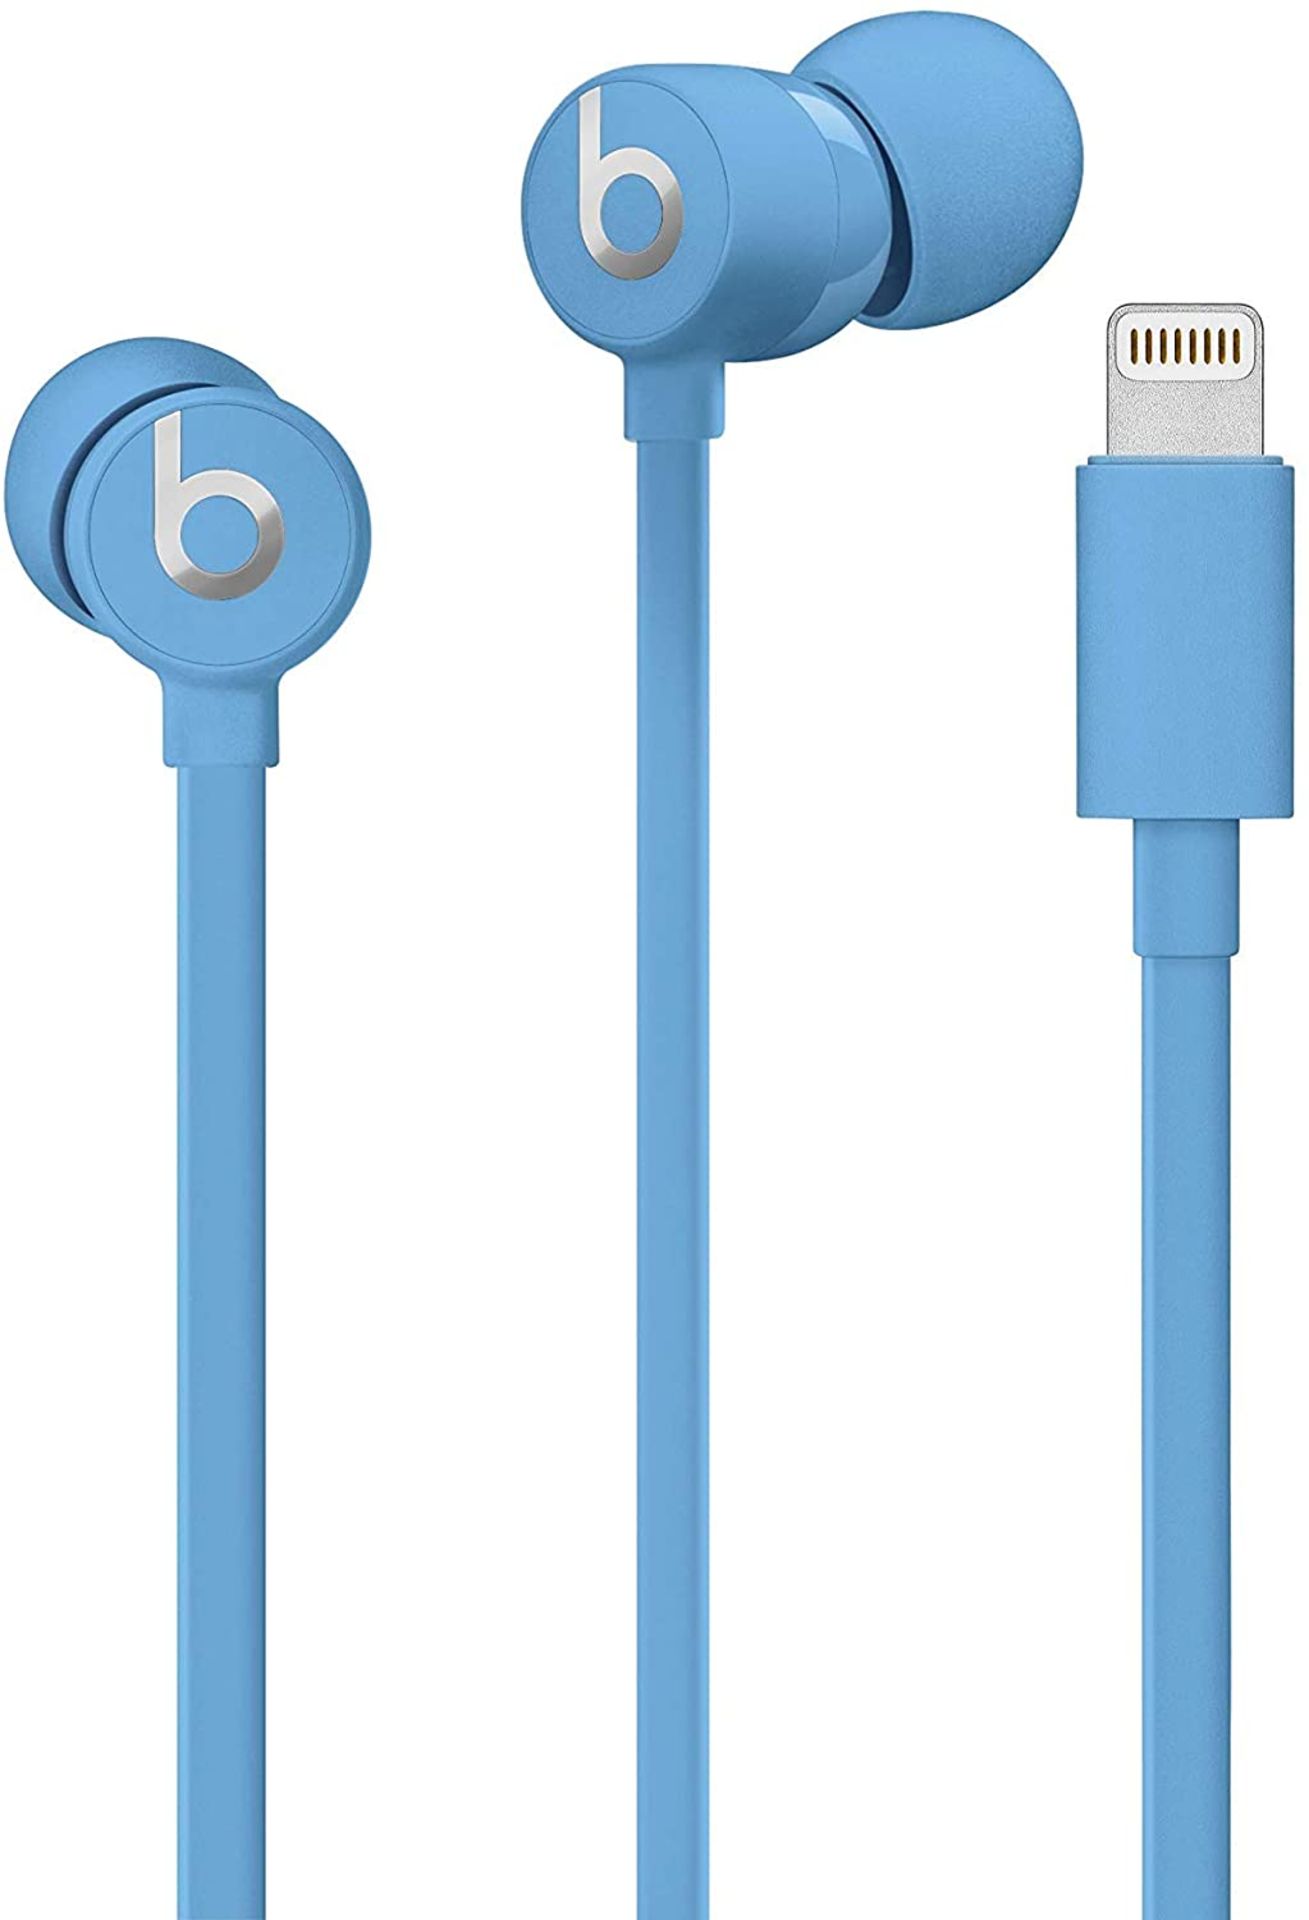 + VAT Brand New UrBeats 3 Earphones With Lightning Connector - Blue - Ergonomic Design - High